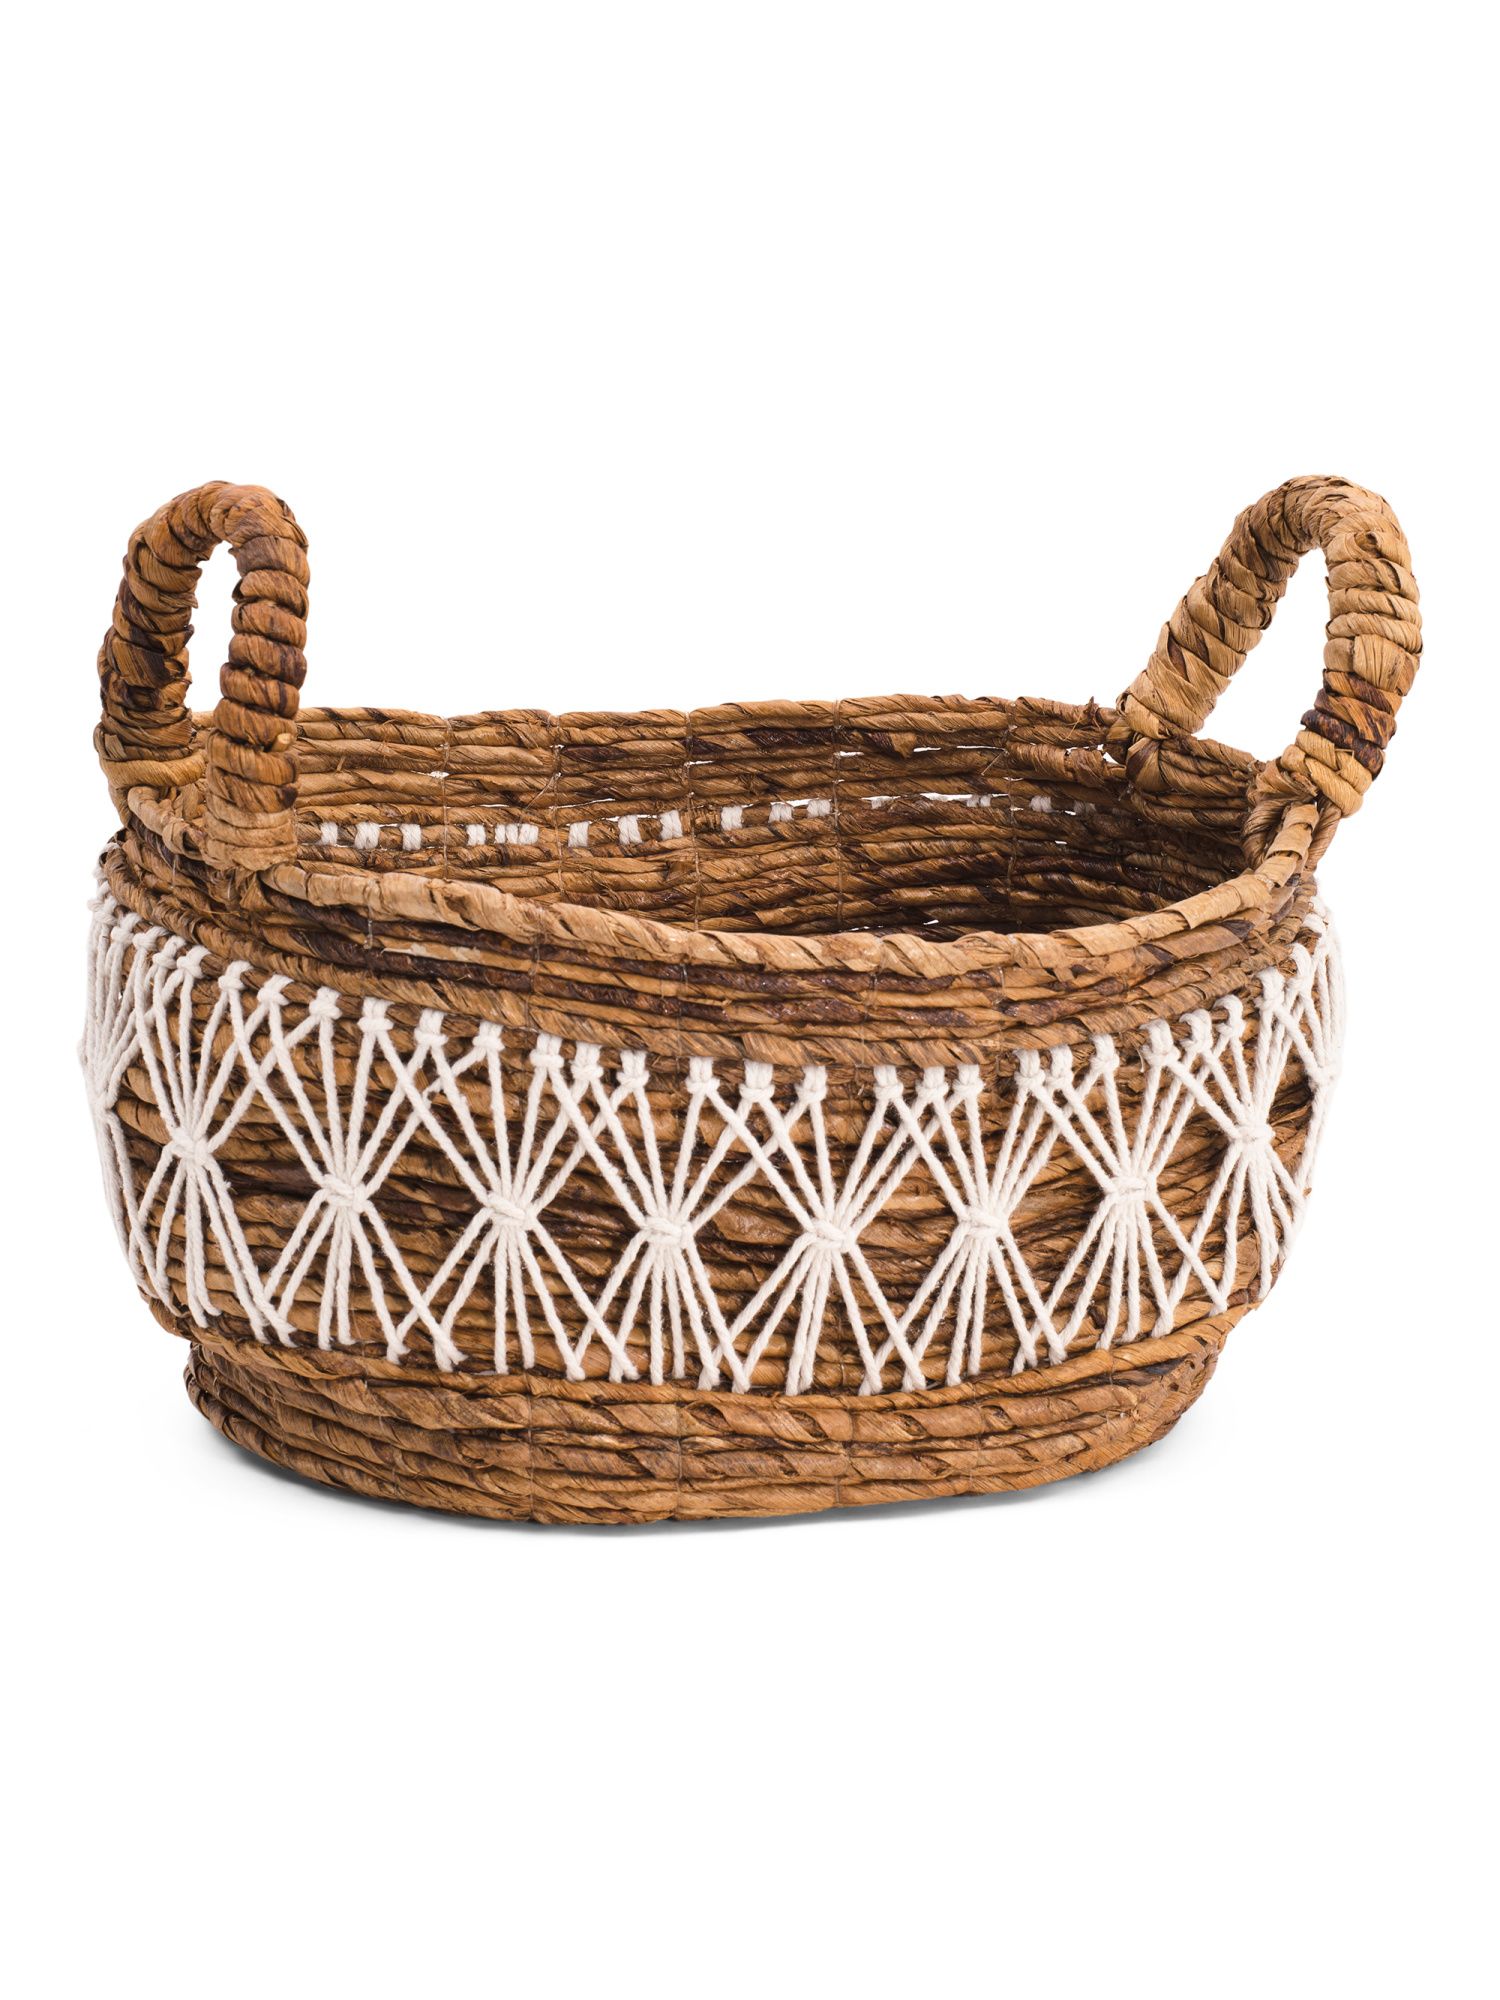 Small Banana Oval Basket With Macrame Detail | TJ Maxx